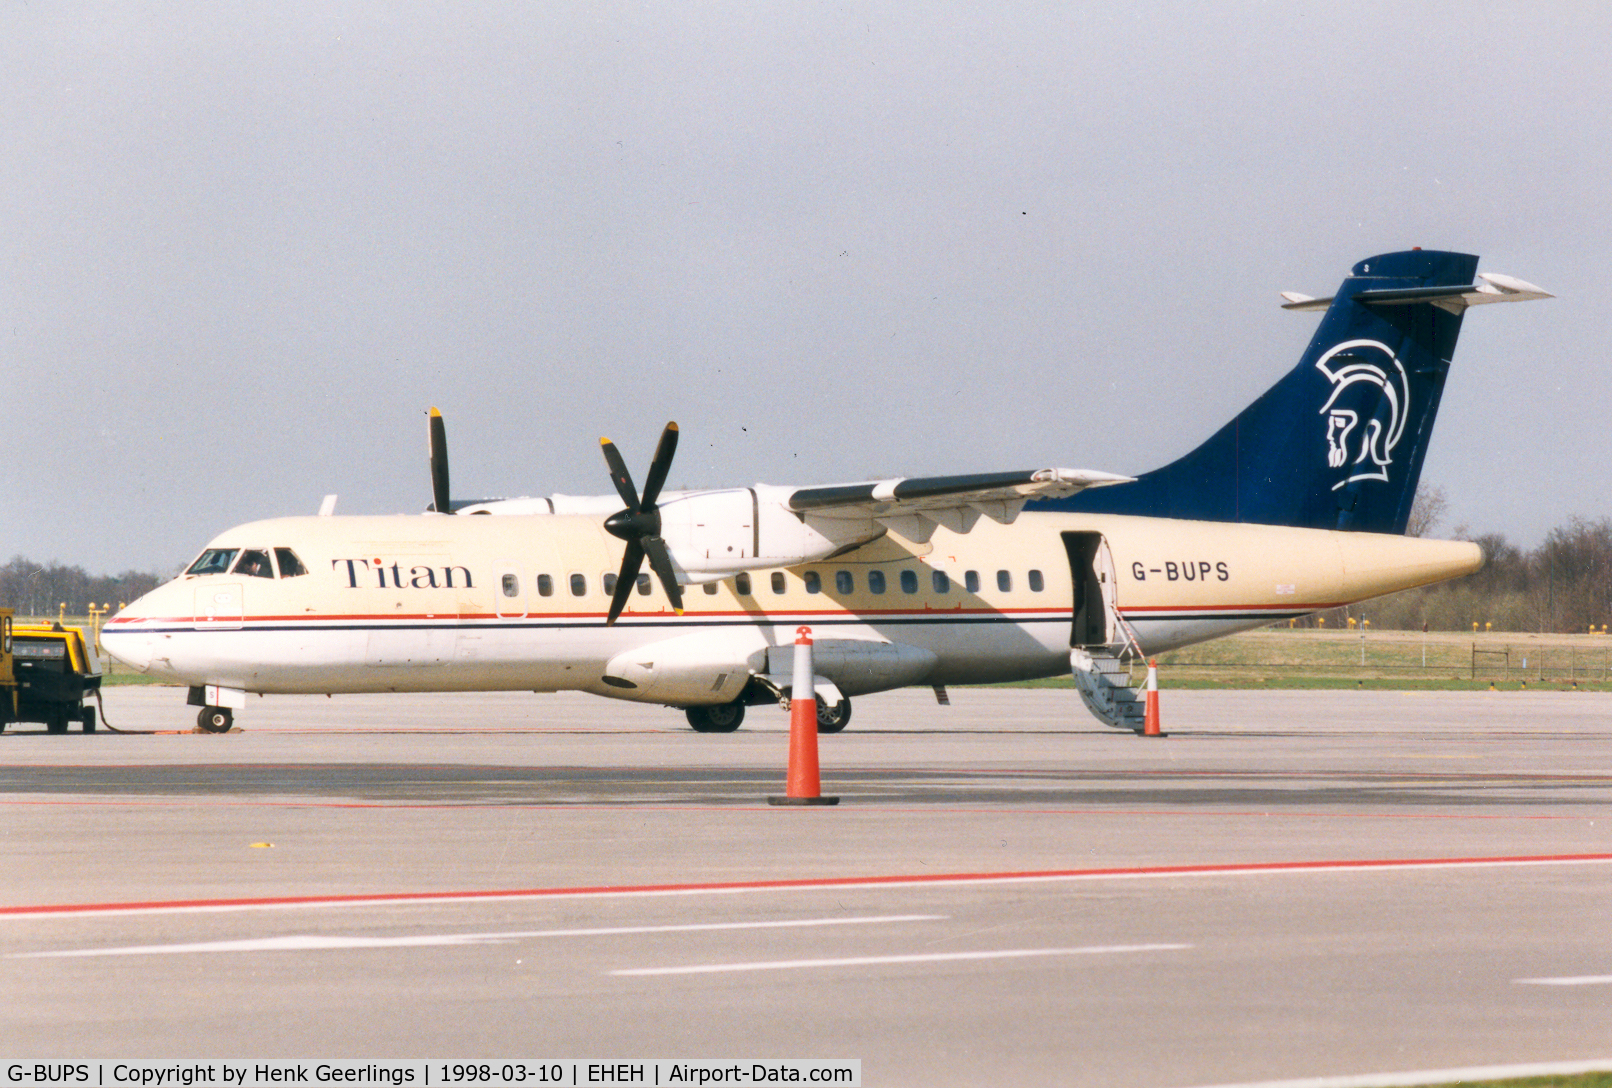 G-BUPS, 1988 ATR 42-300 C/N 109, Titan Airways